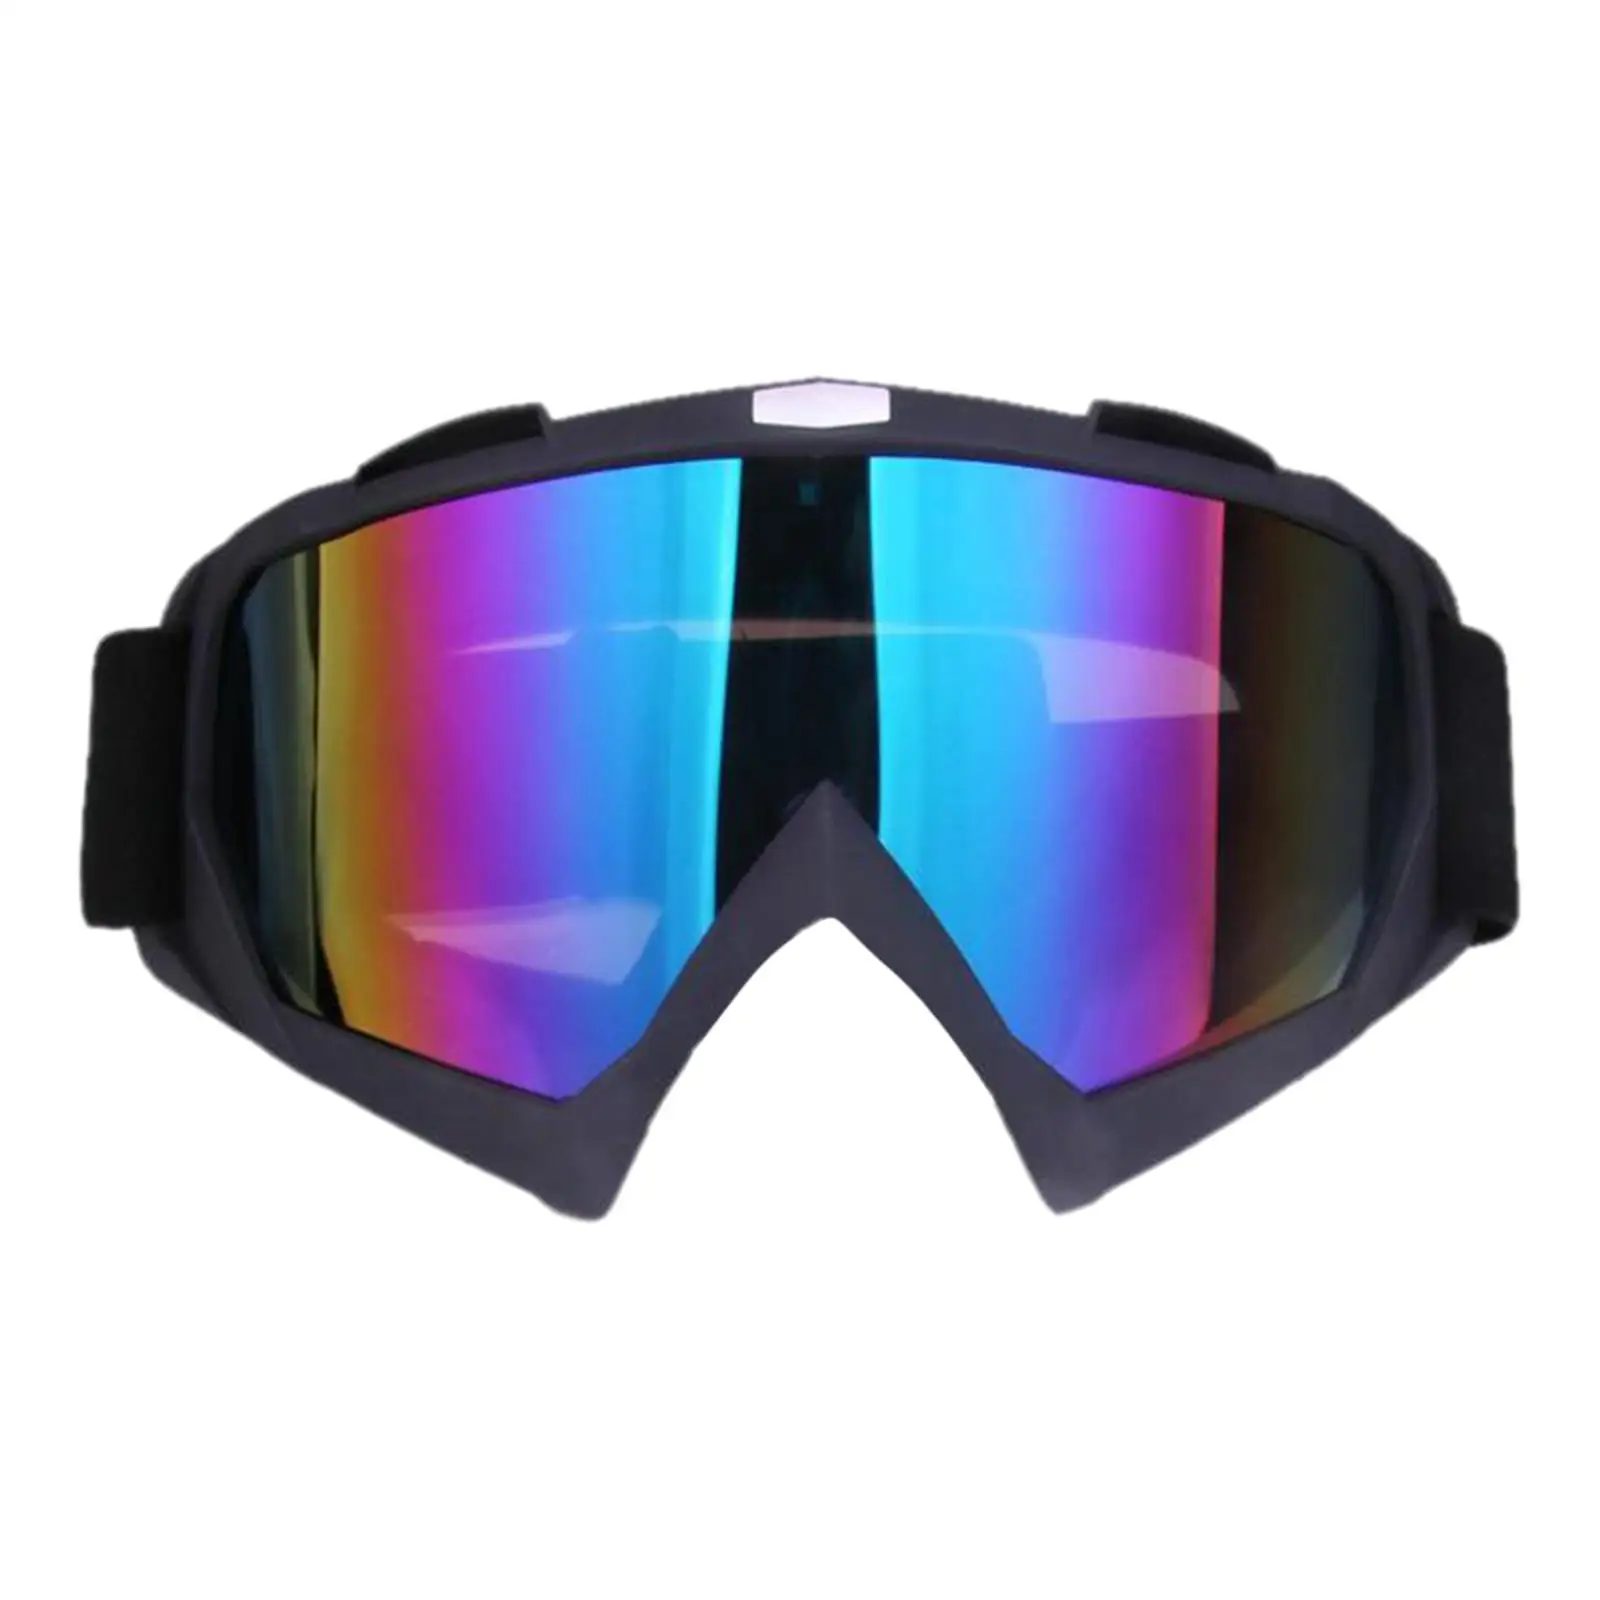  Ski Safety Glasses Goggles WindMotorcycle Eyewear with Adjustable Elastic Strap